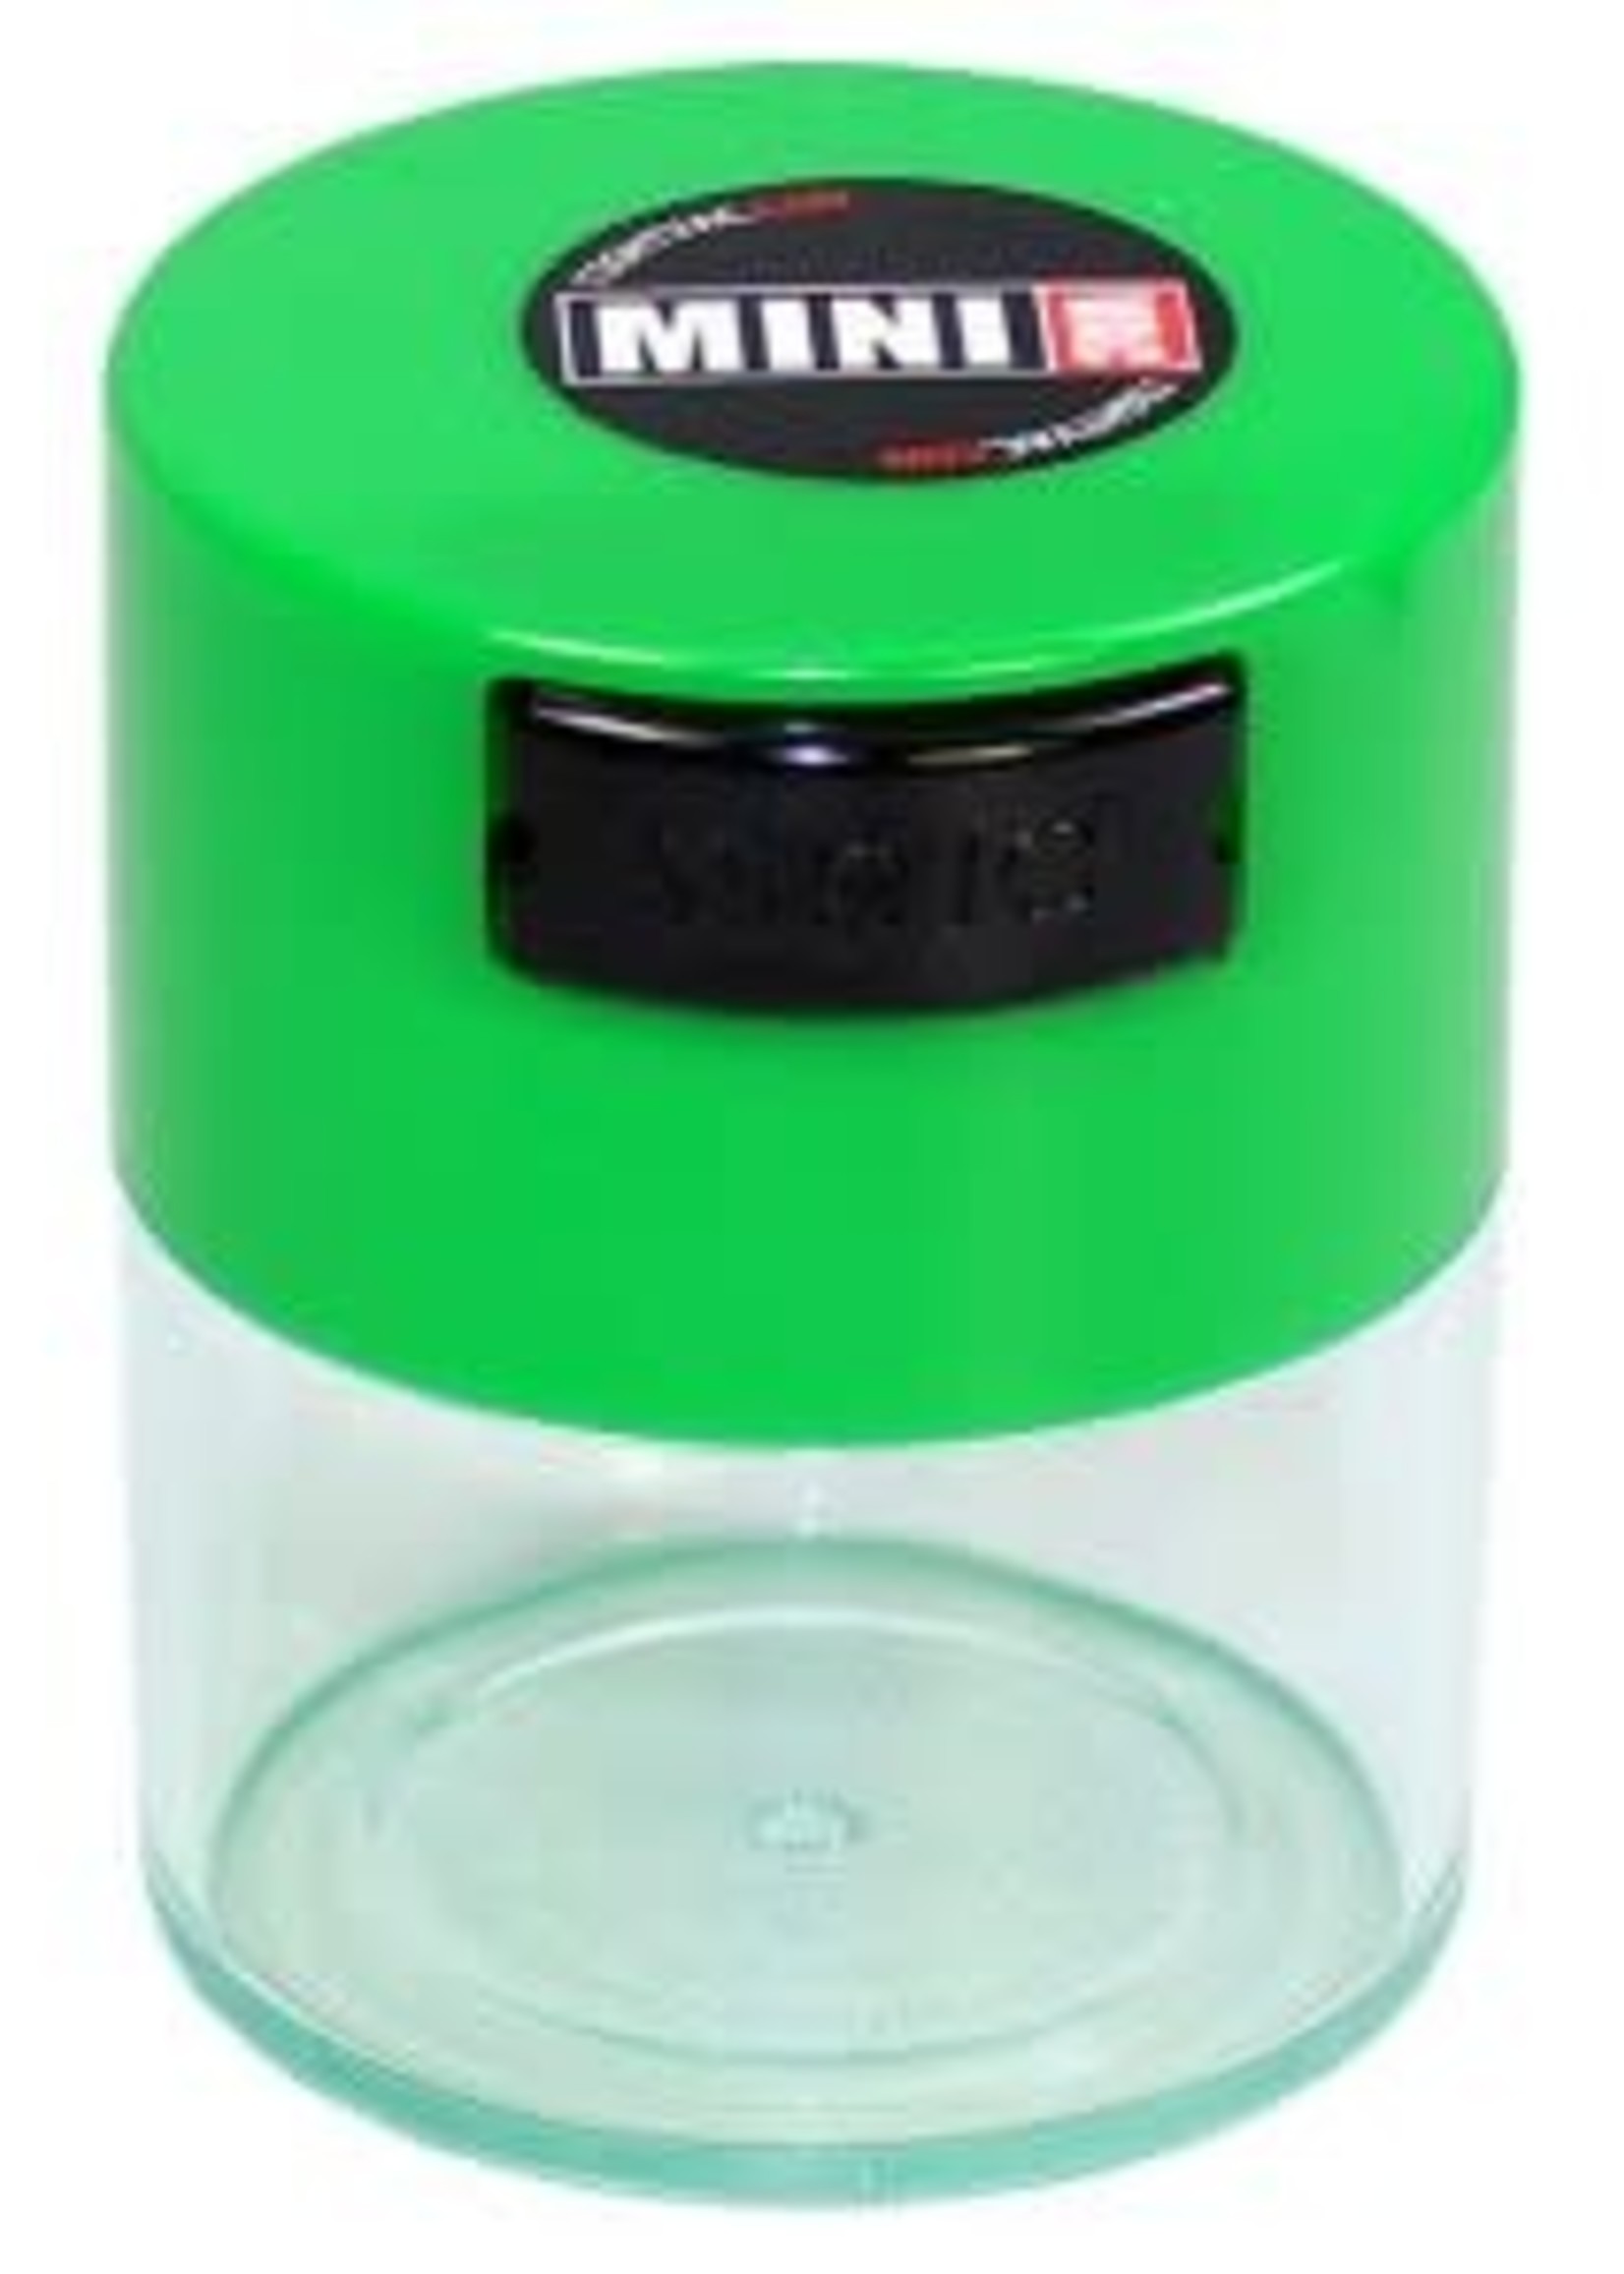 MiniVac 0.12 liter Green Cap/Clear Body